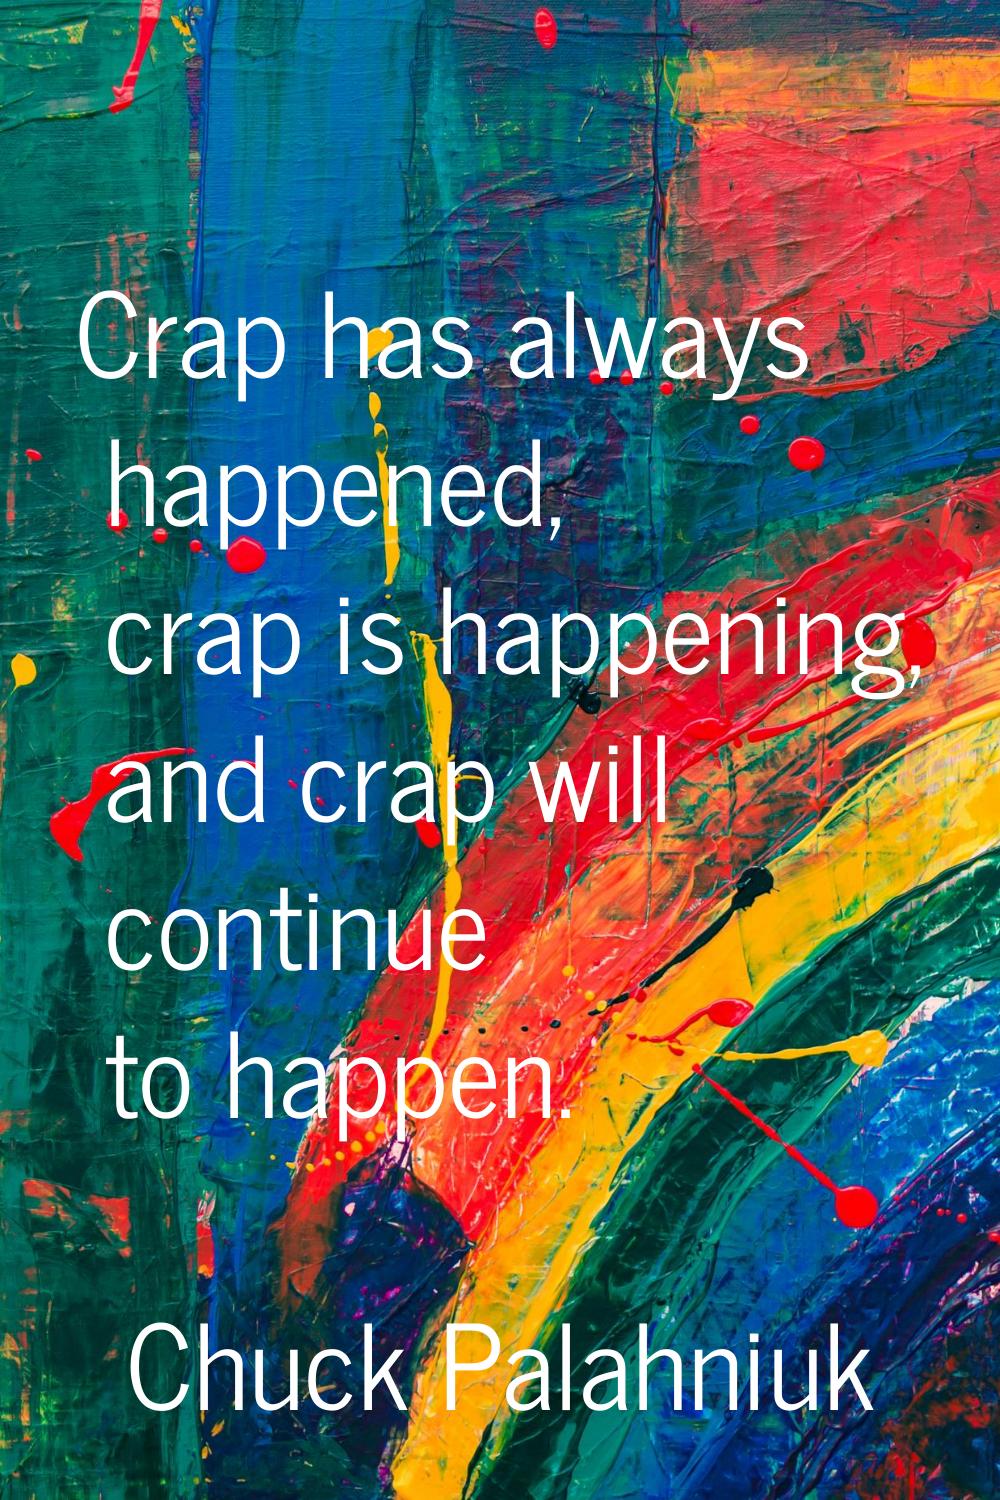 Crap has always happened, crap is happening, and crap will continue to happen.